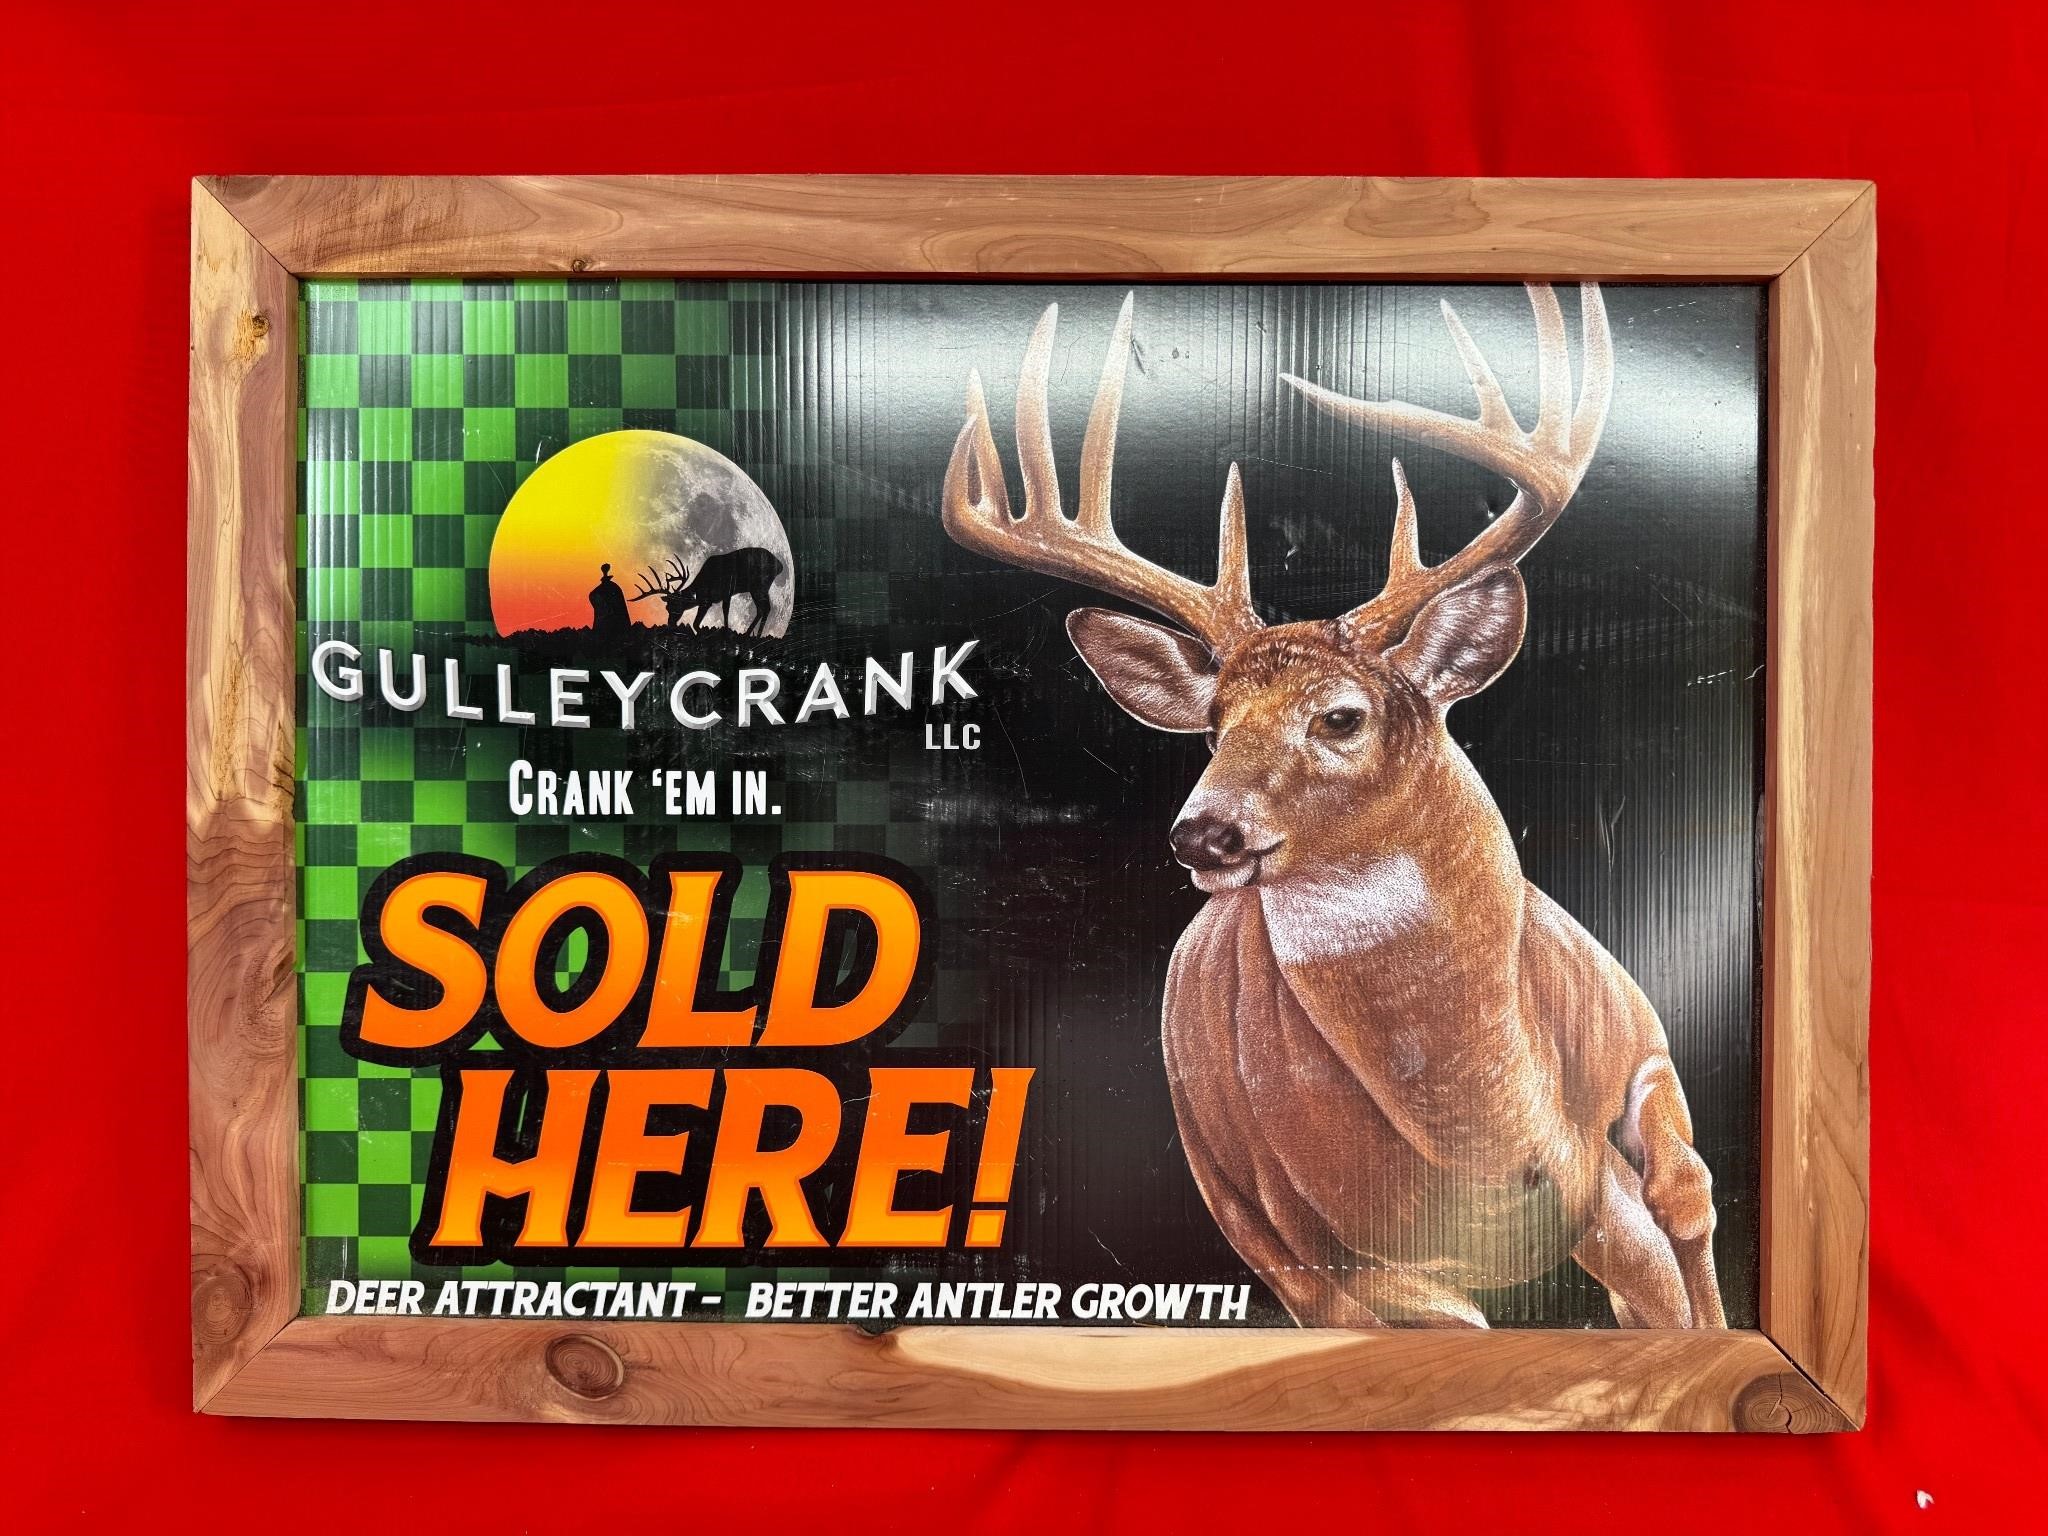 Gulley Crank Deer Attractants Advertising Sign